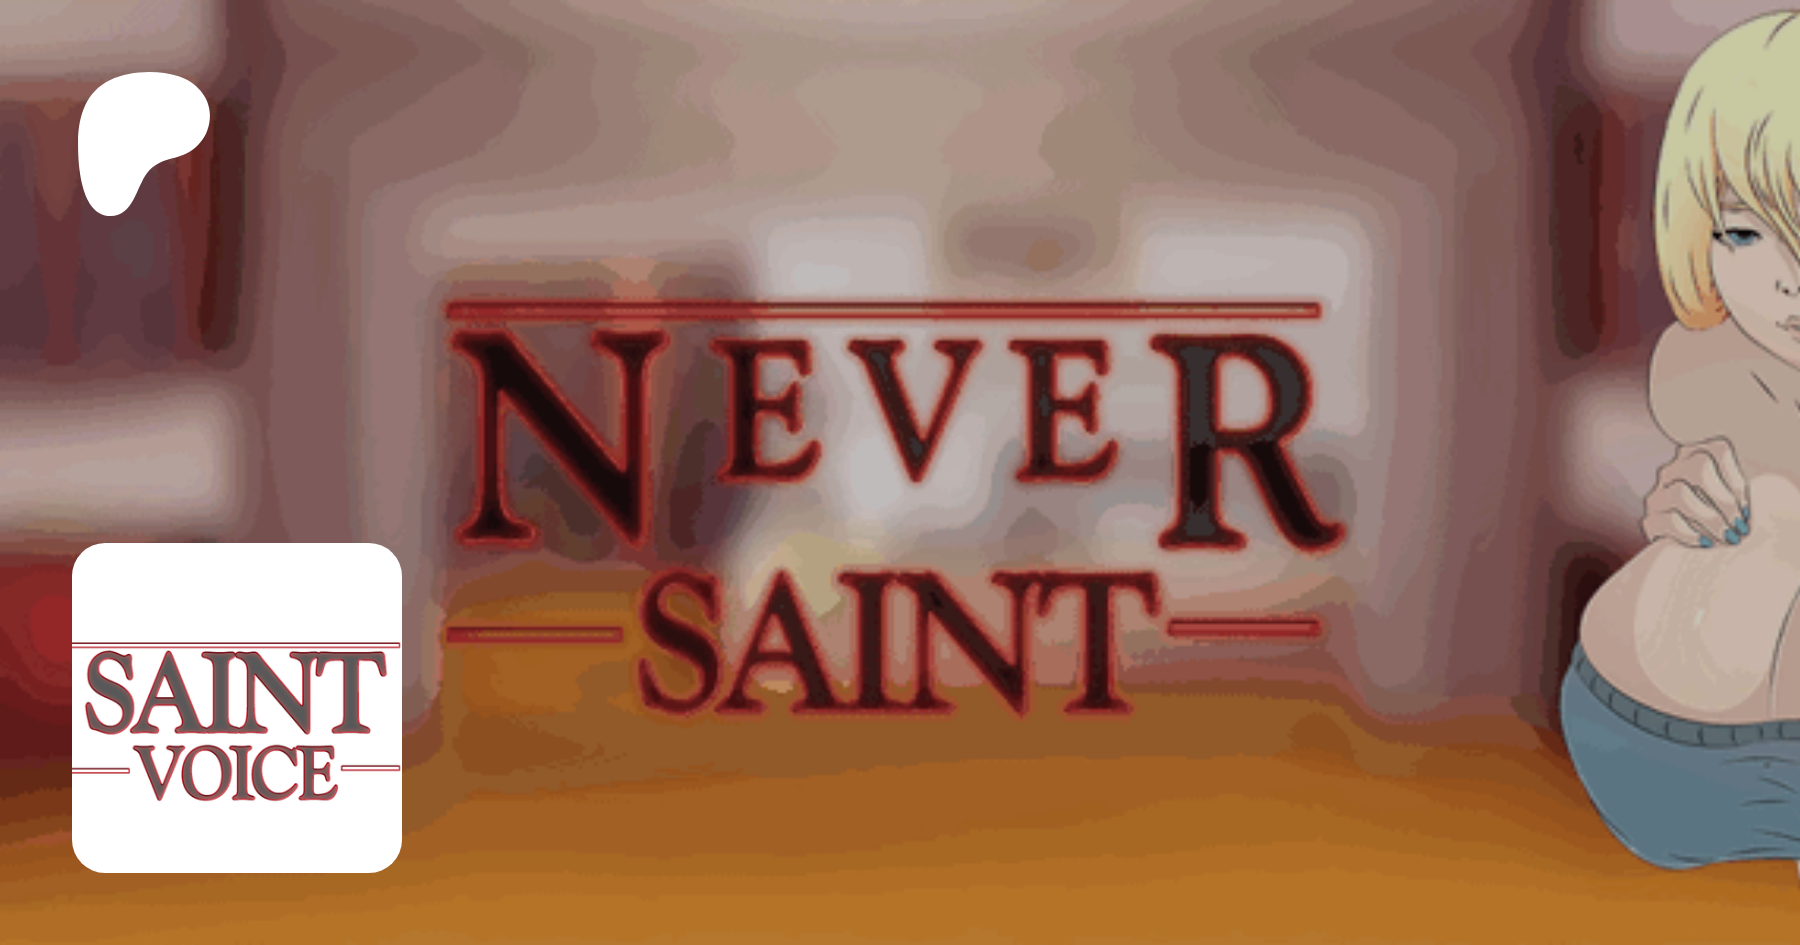 Never saint patreon